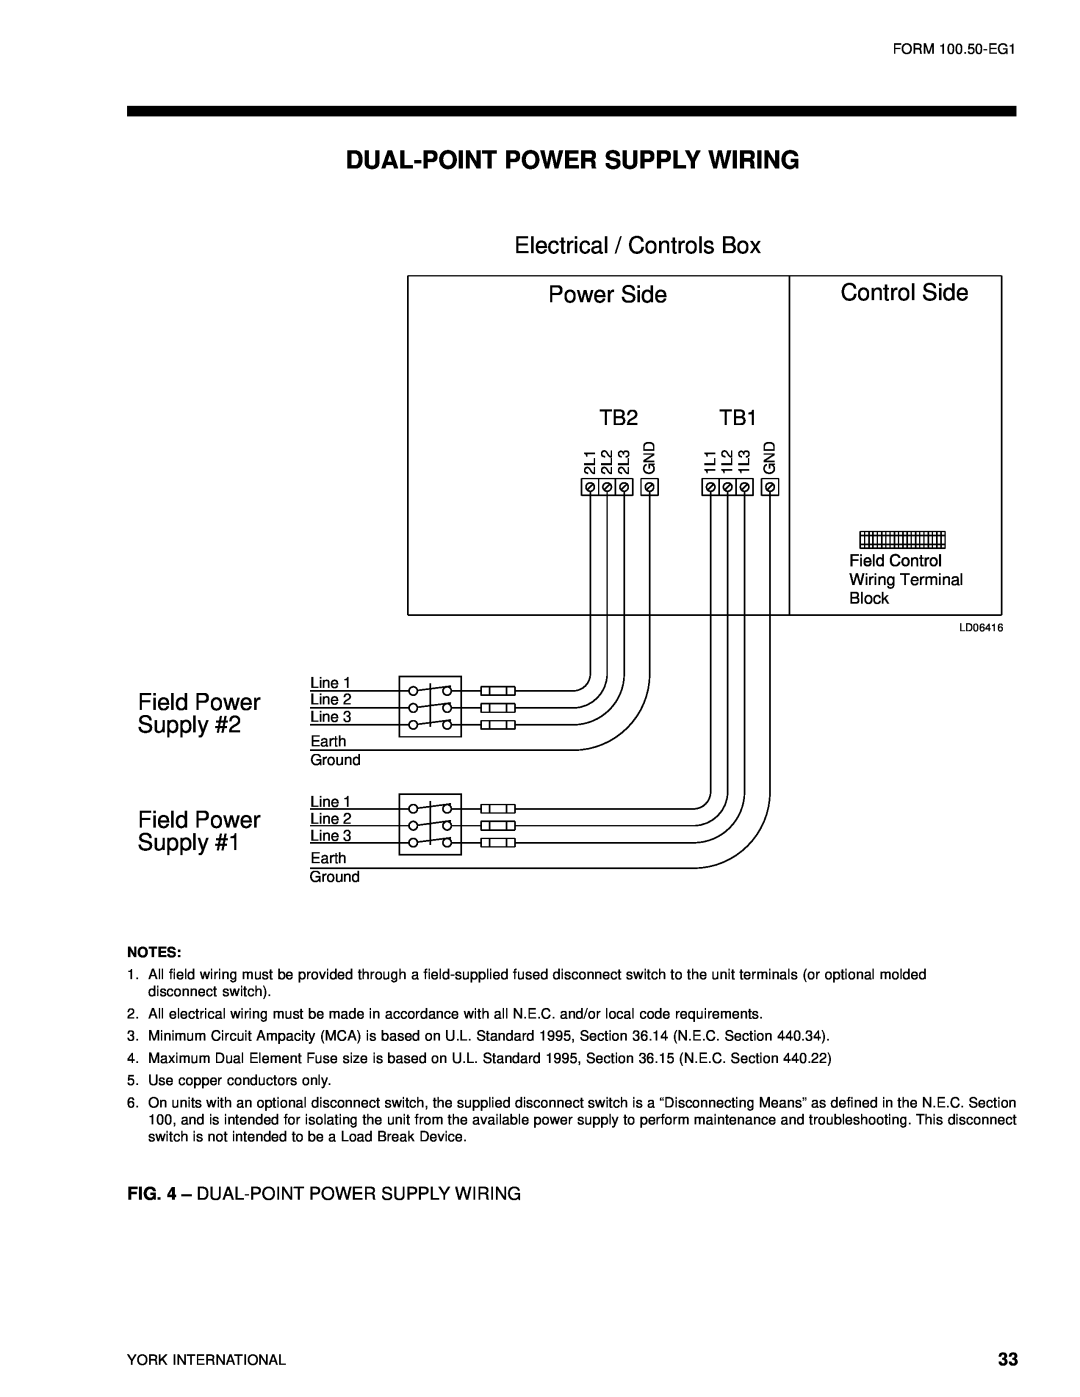 York R-407C manual Dual-Point Power Supply Wiring, Field Power Supply #2 Field Power Supply #1, TB2 TB1, Control Side 